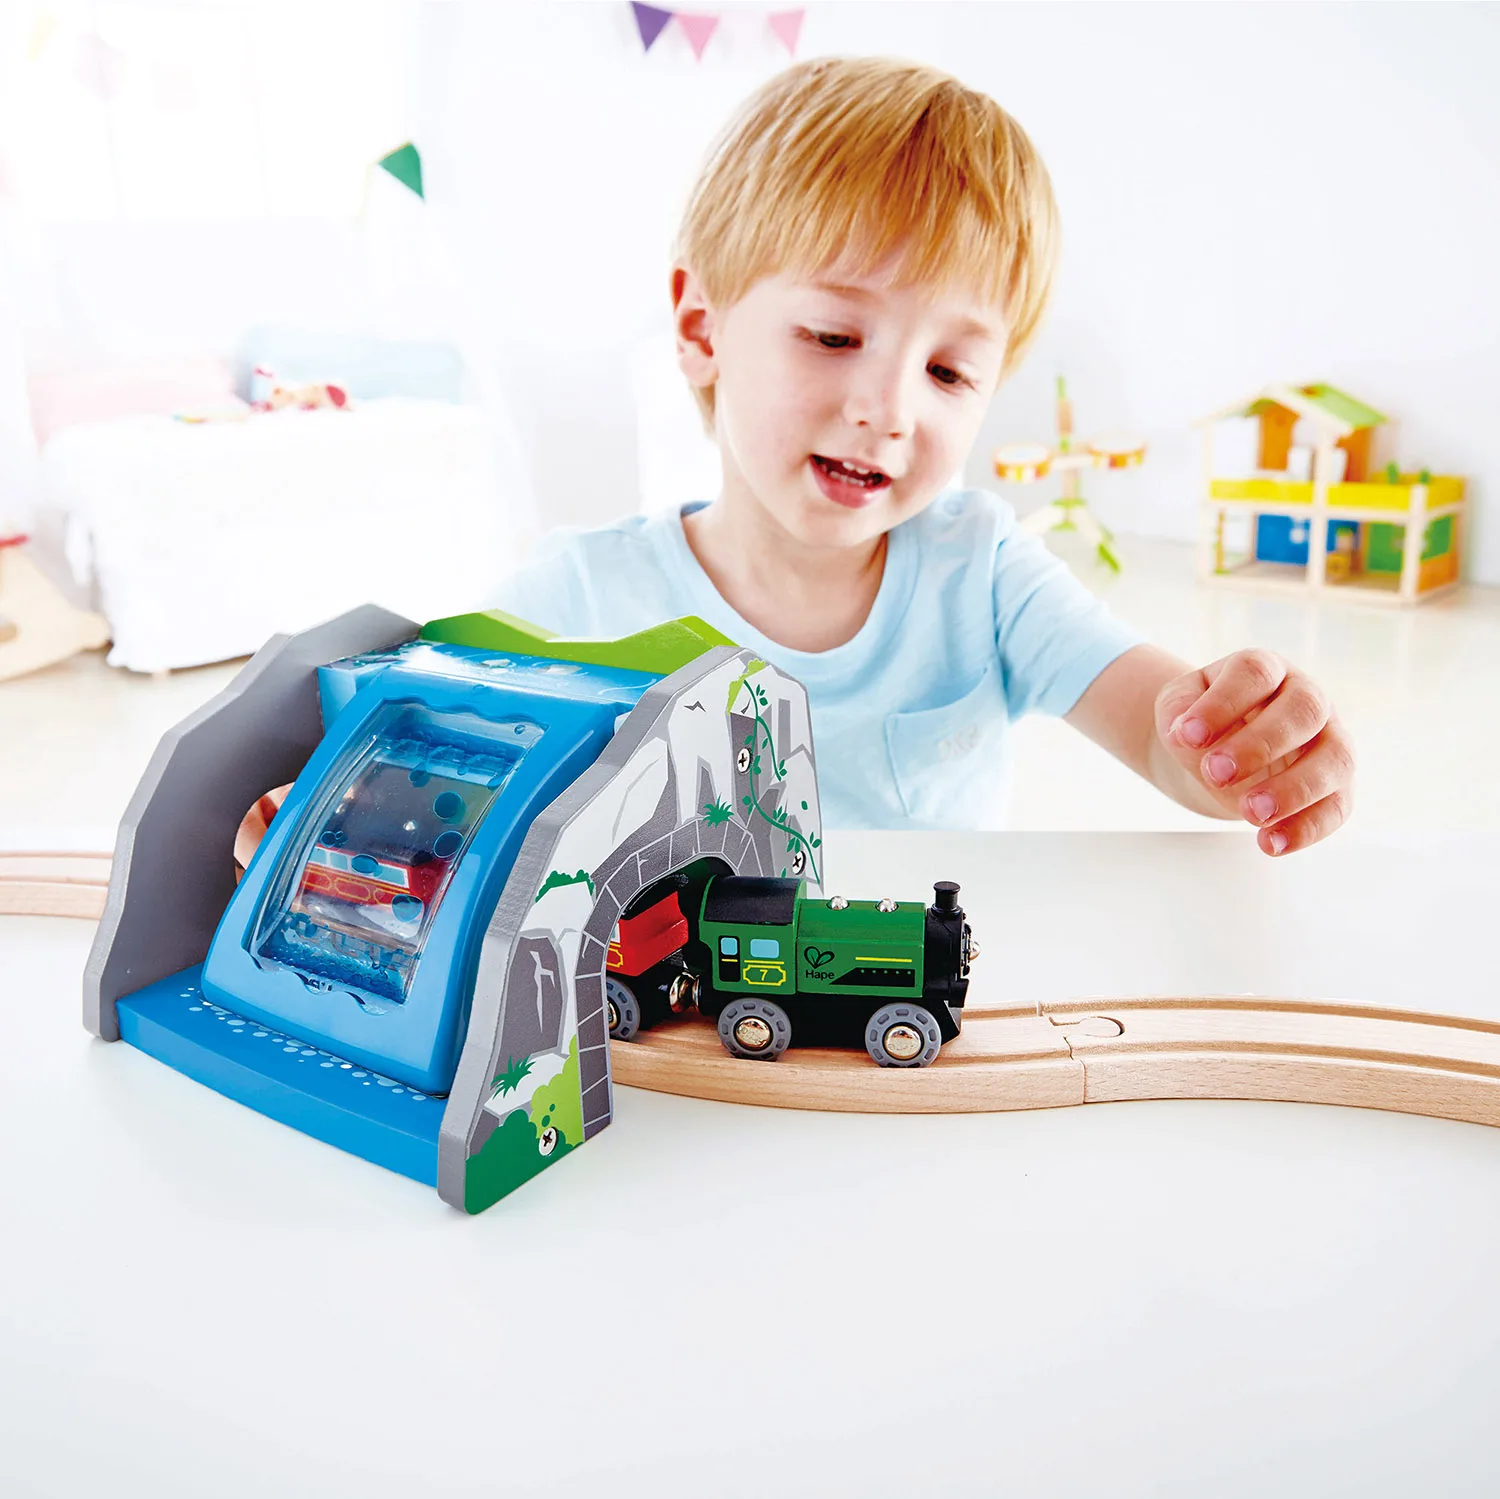 Hape Fancy Design For Children Kid Toy Railway